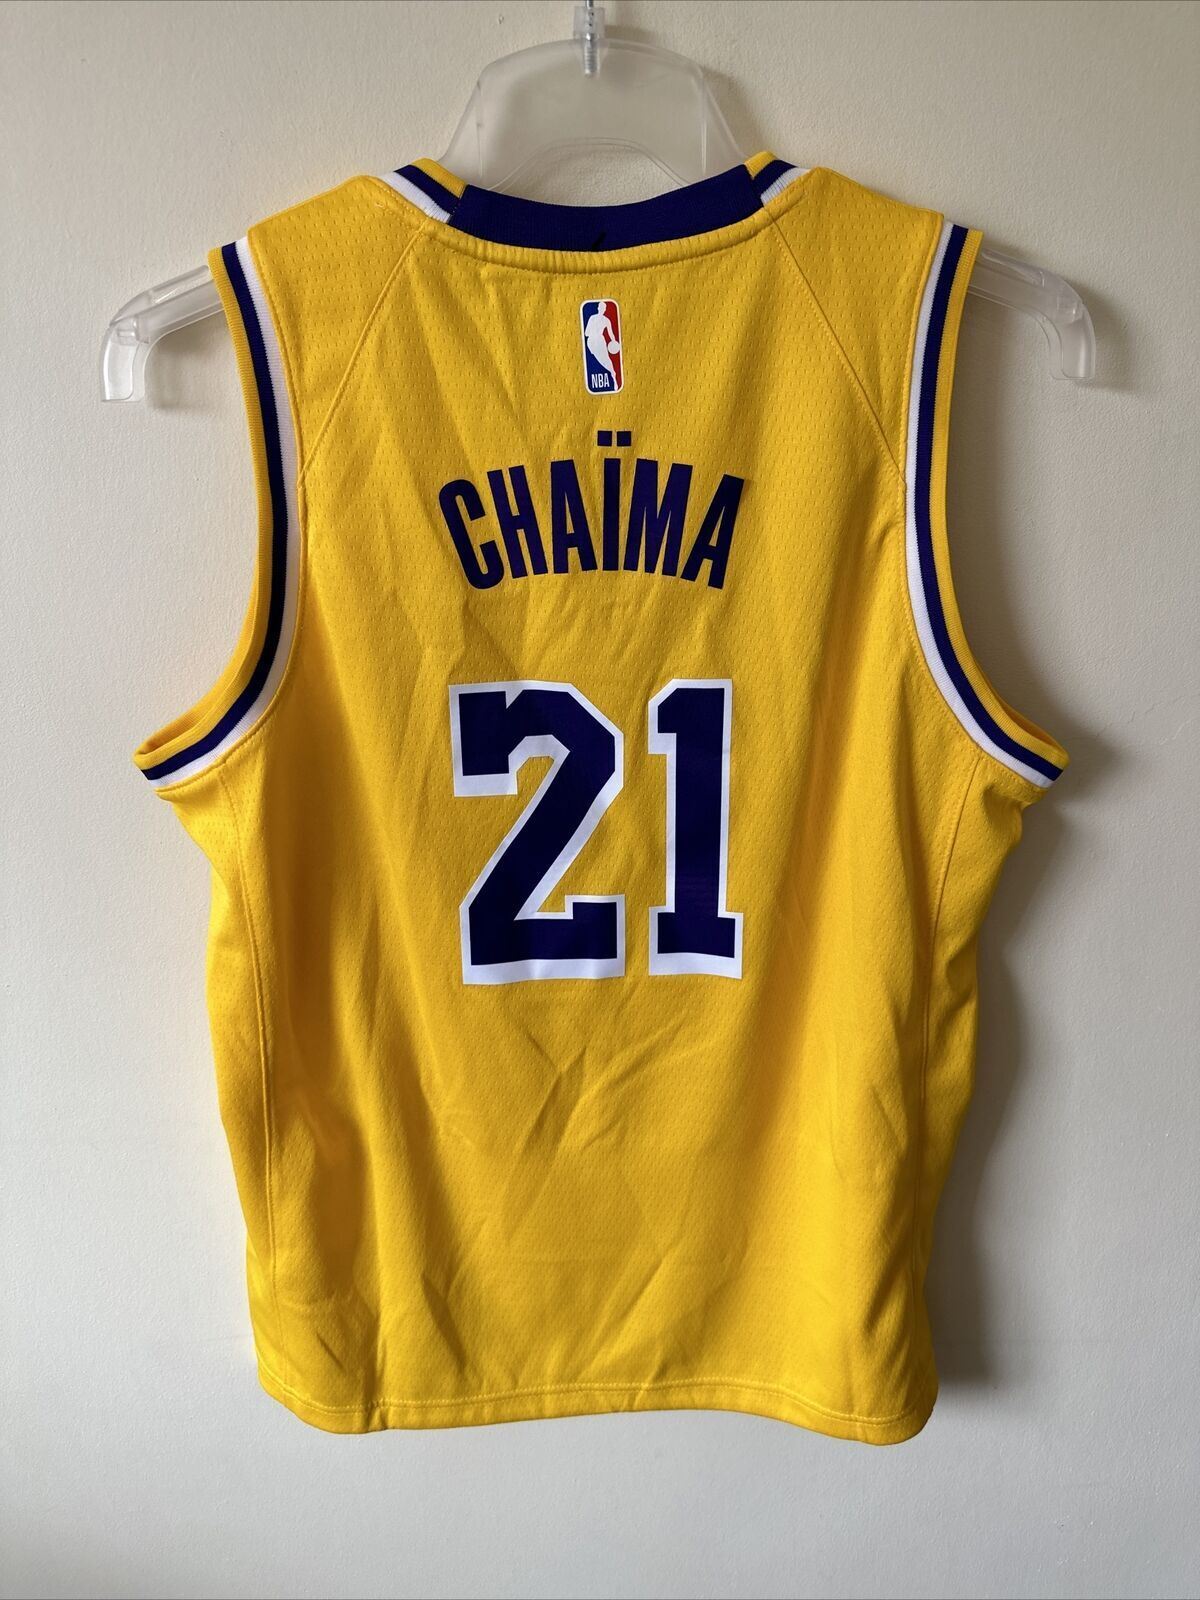 Nike NBA LA Lakers Swingman Jersey CHAIMA 21 Basketball Youth 12-13 Years *DF